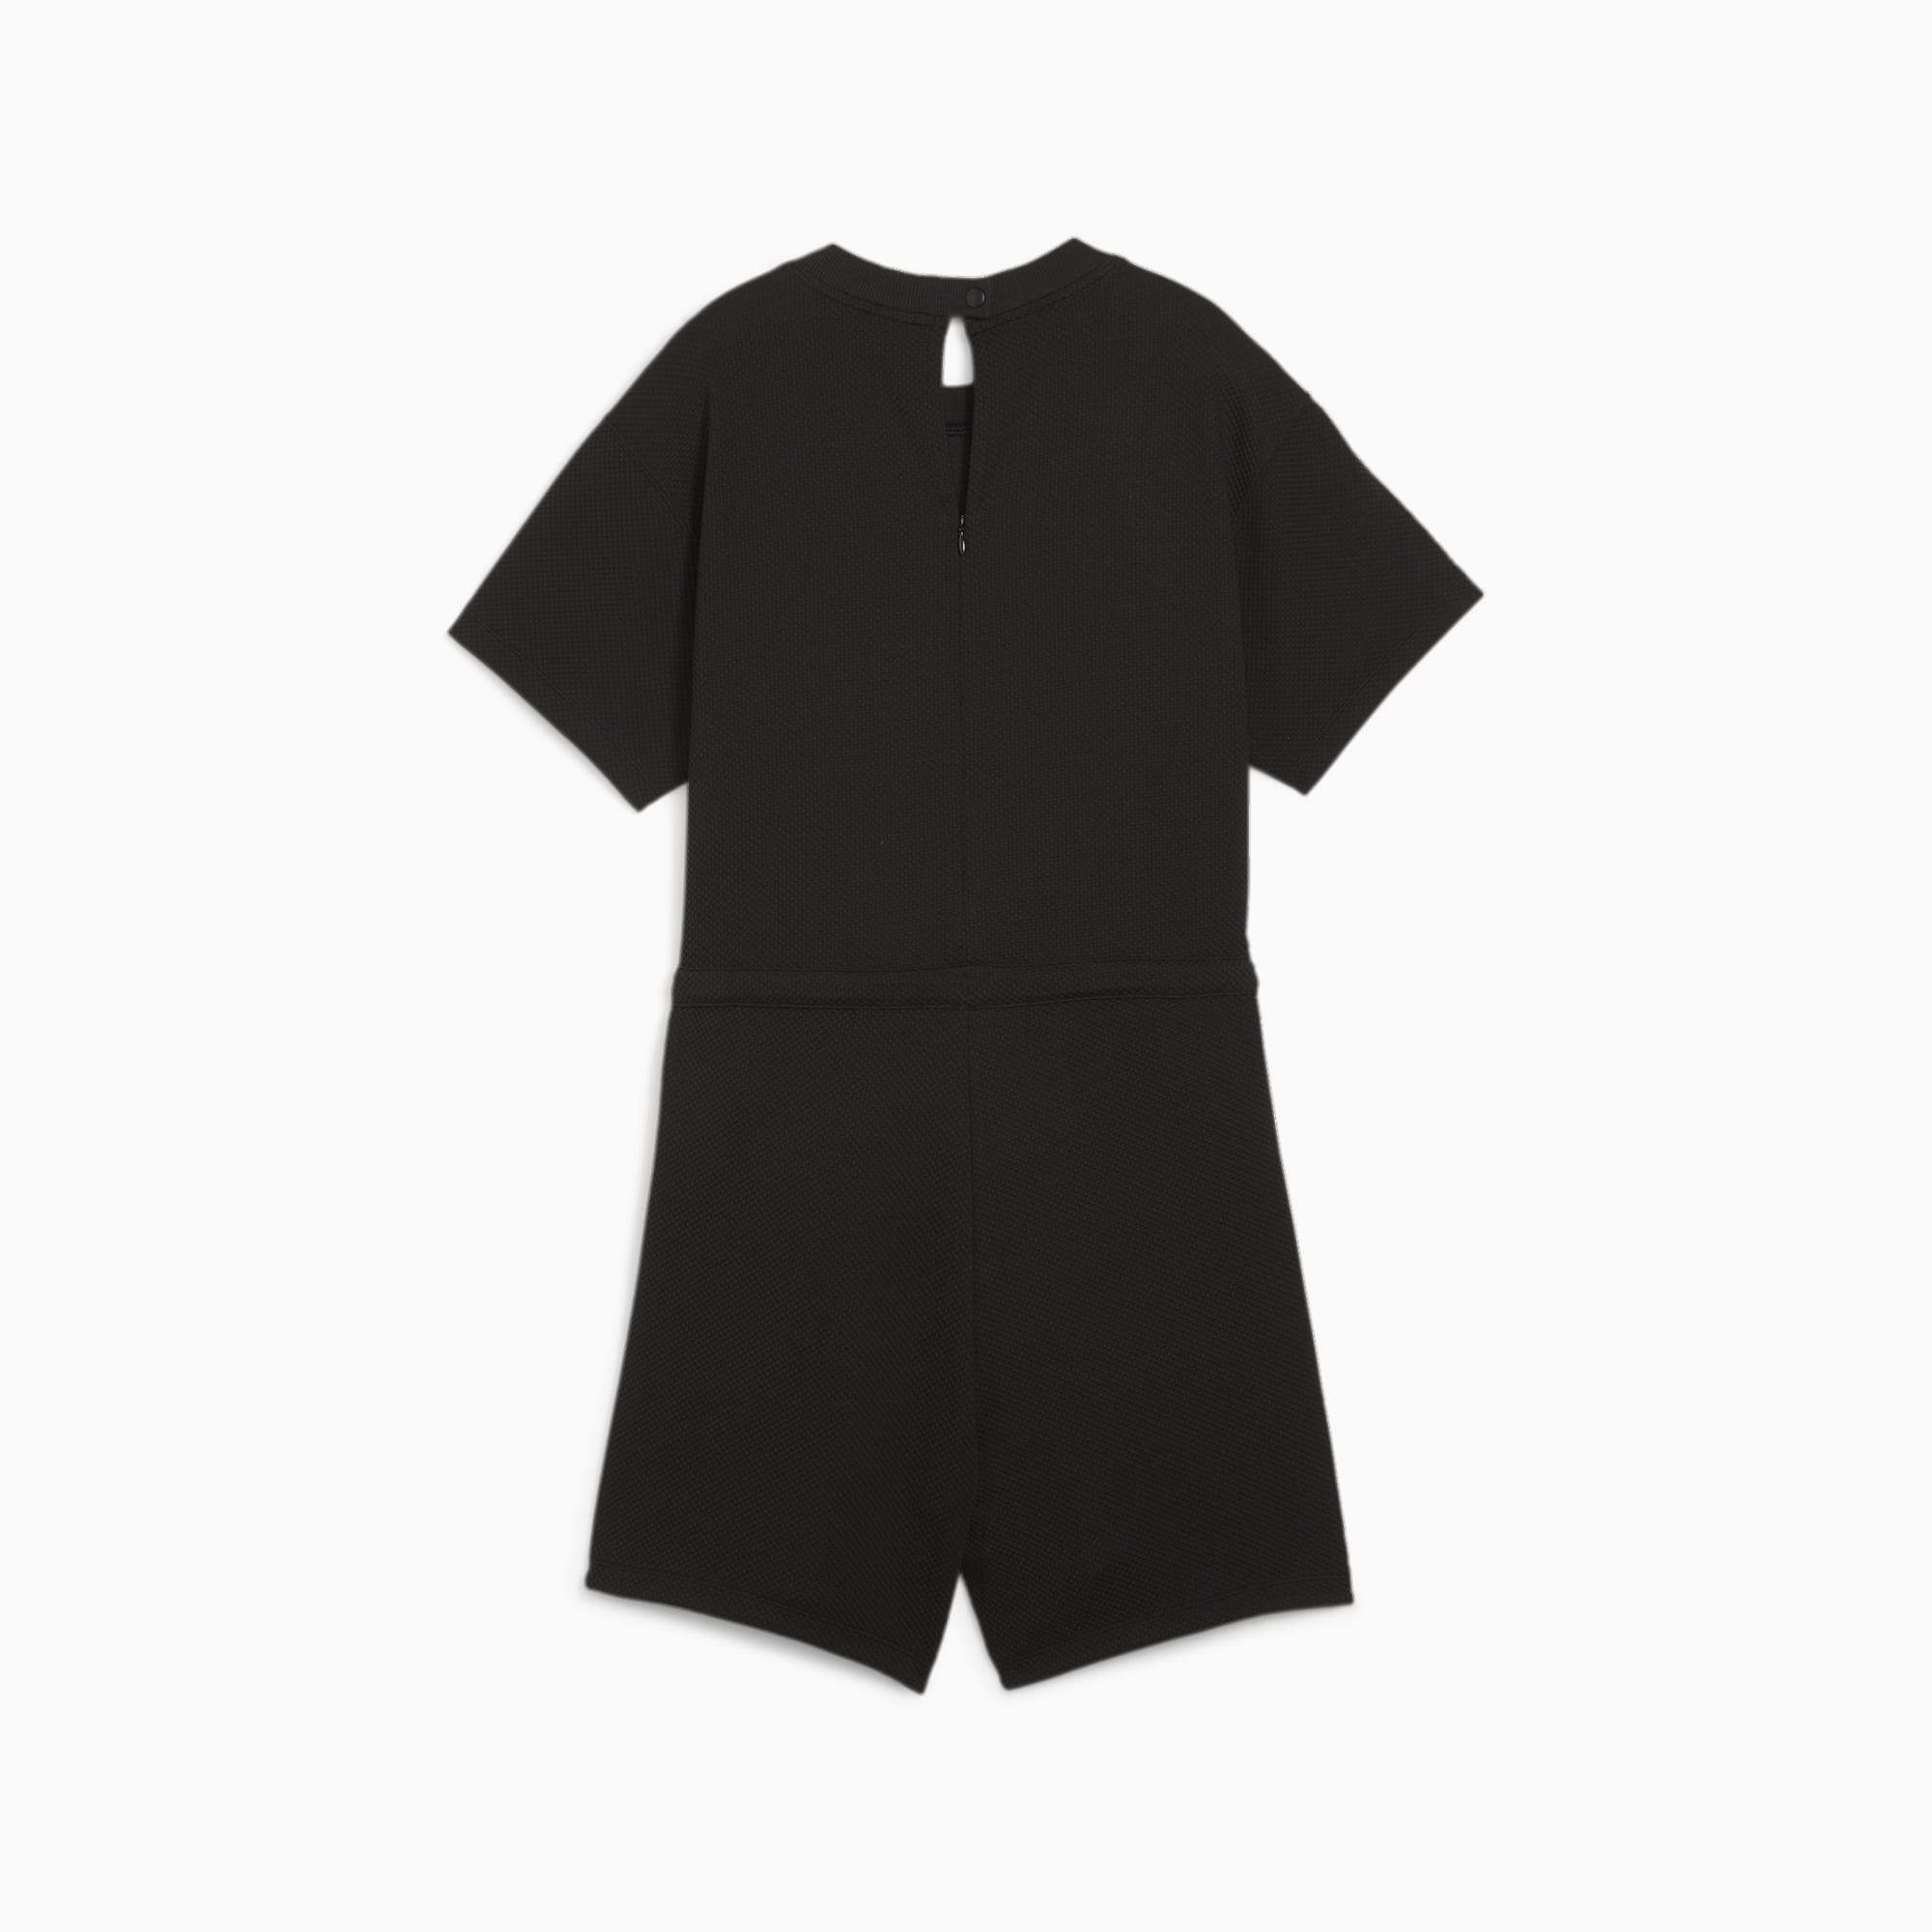 PUMA Her Women's Short Jumpsuit, Black, Size S, Clothing